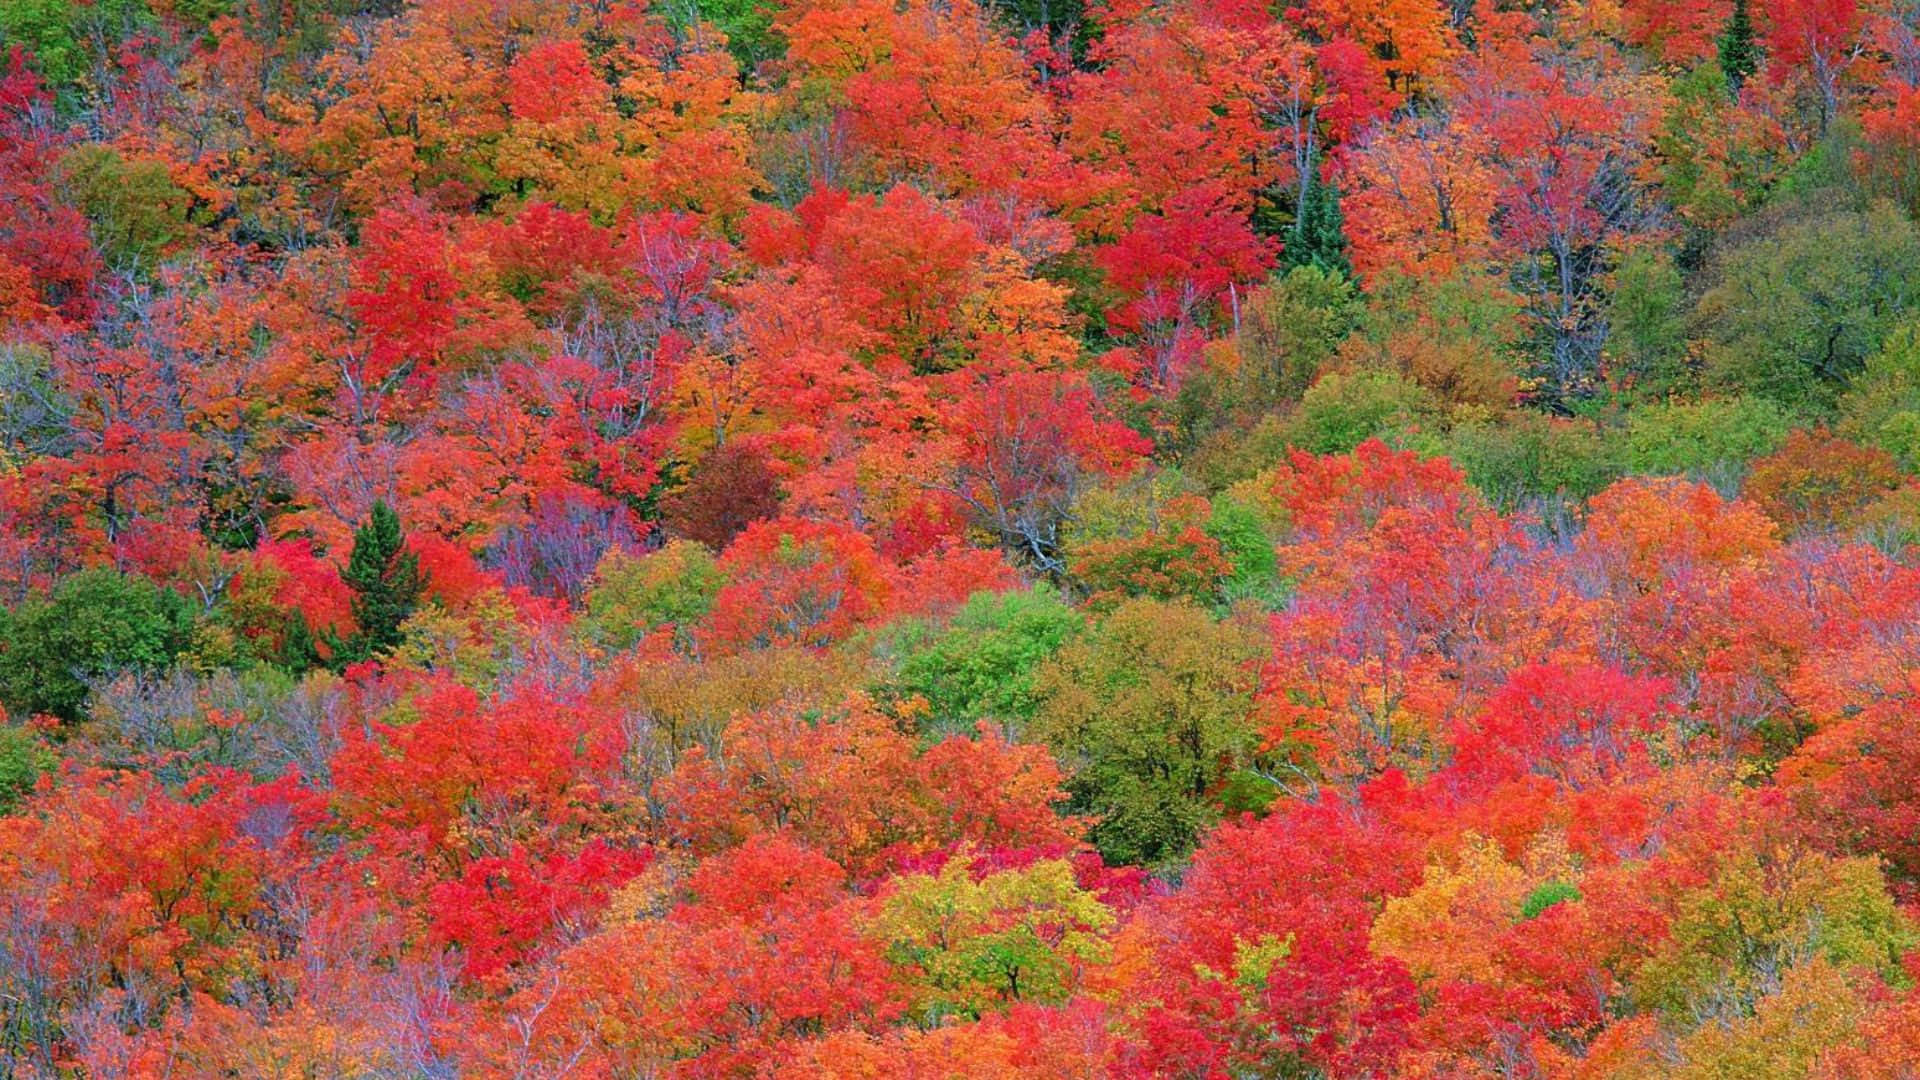 Enchanting Fall Foliage Scenery Wallpaper